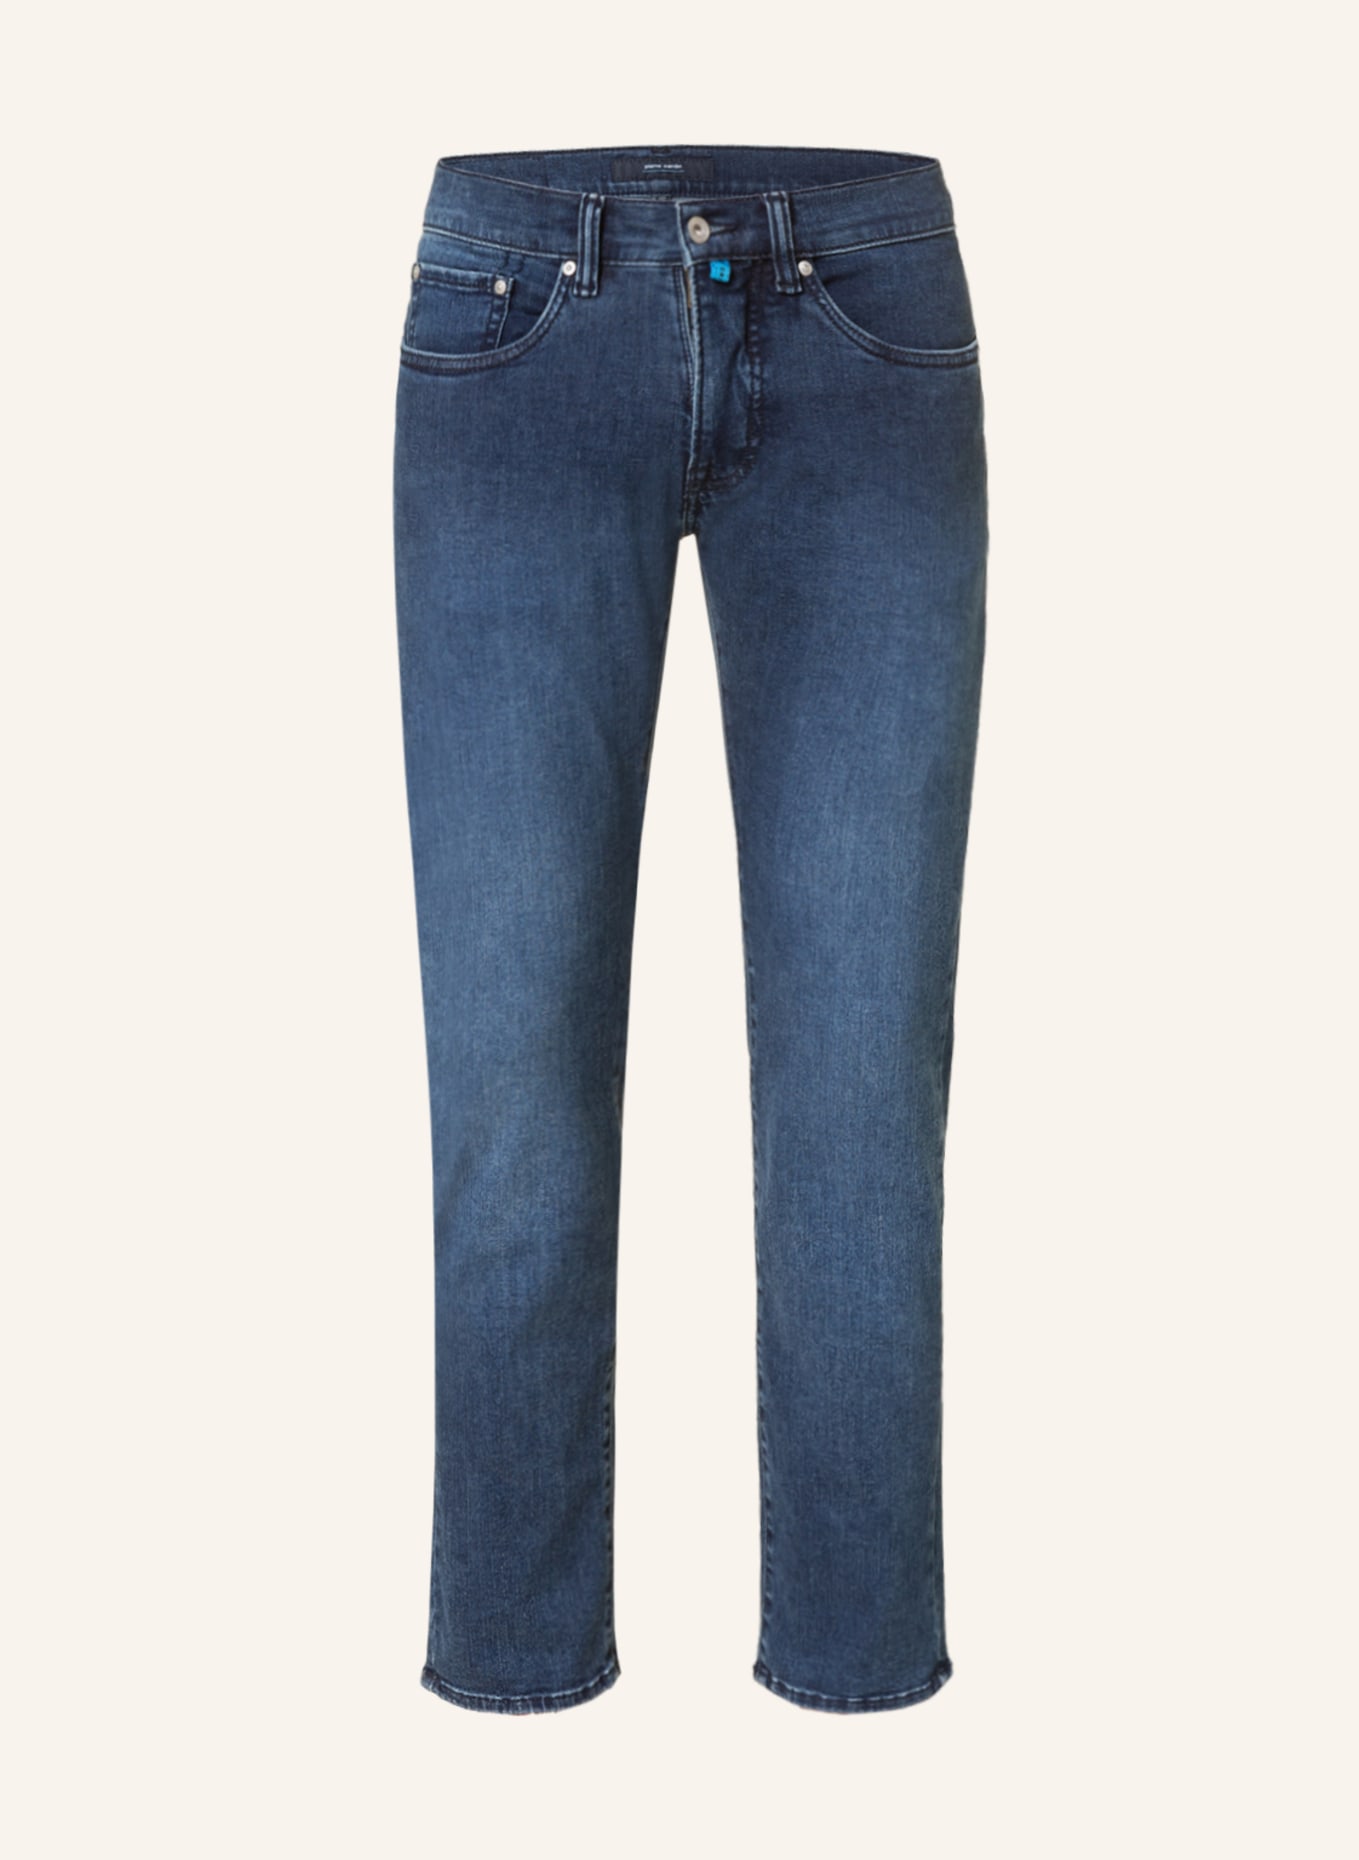 pierre cardin Jeans ANTIBES Slim Fit , Farbe: 6812 dark blue used (Bild 1)